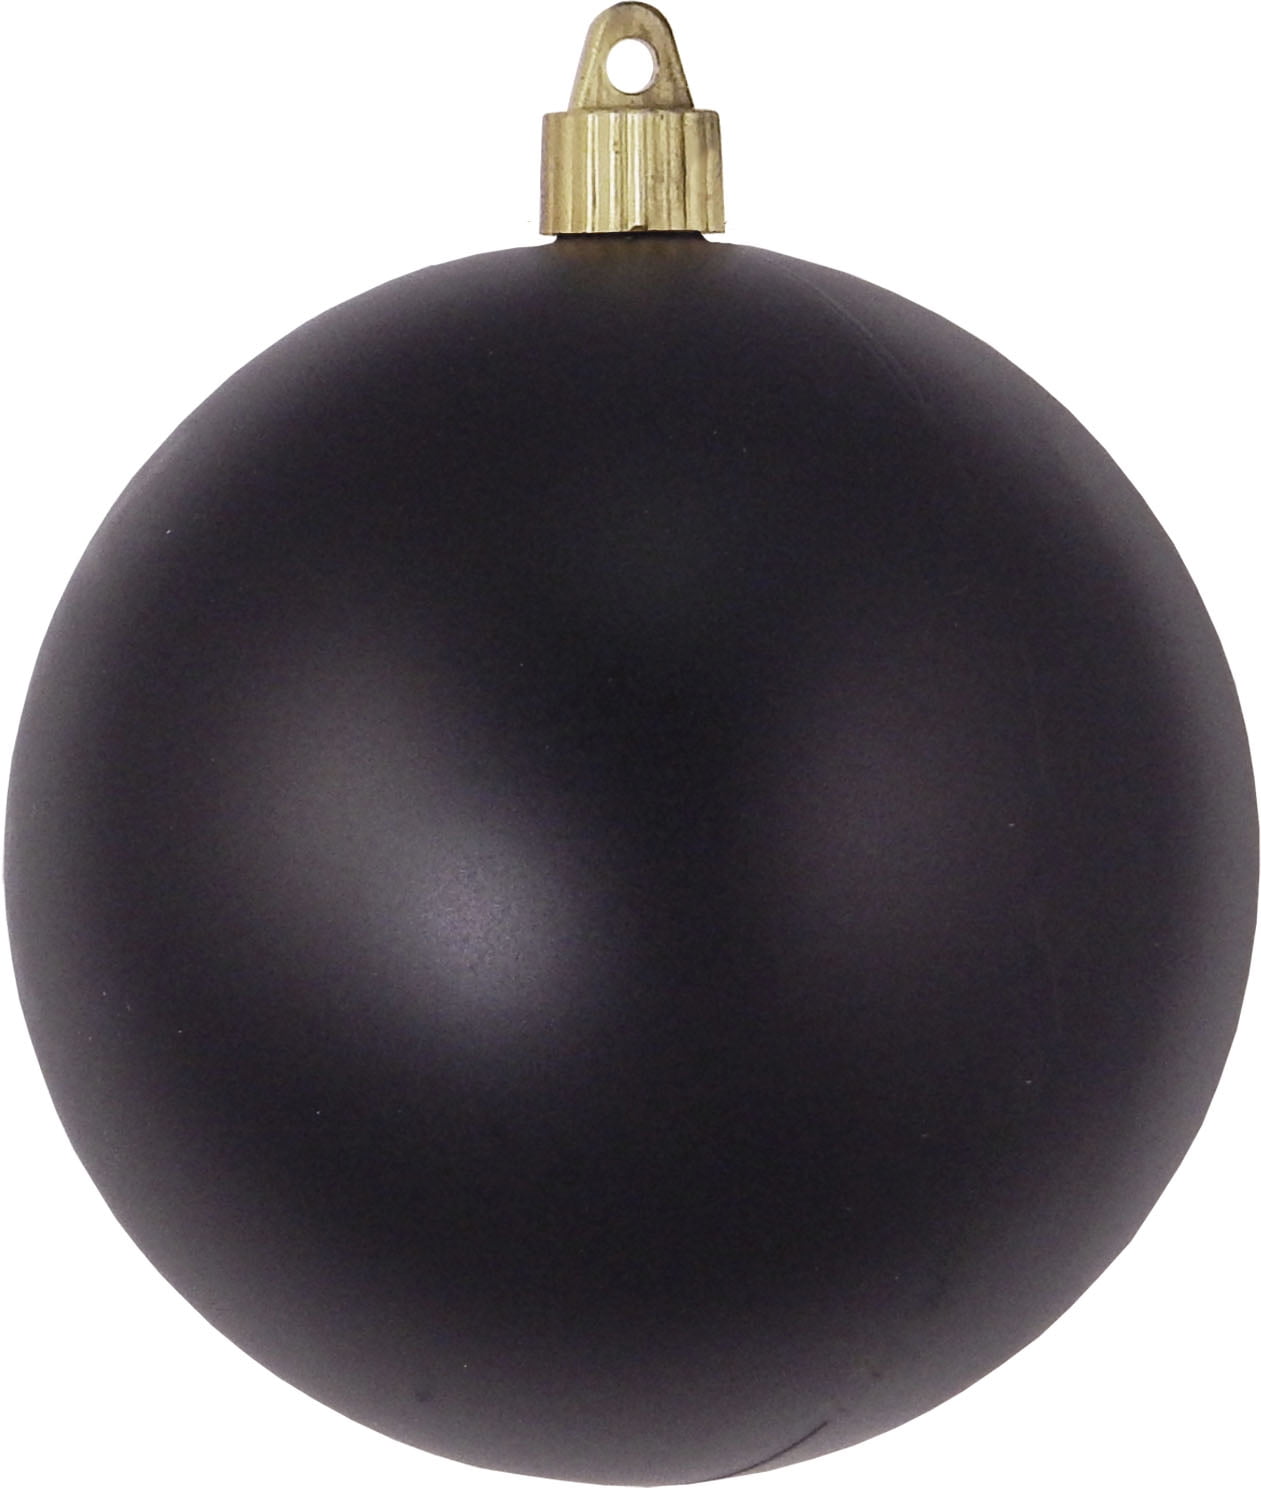 52 Pack Black Christmas Ornaments, Shatterproof Christmas Tree Ornaments  Set wit 705353206160